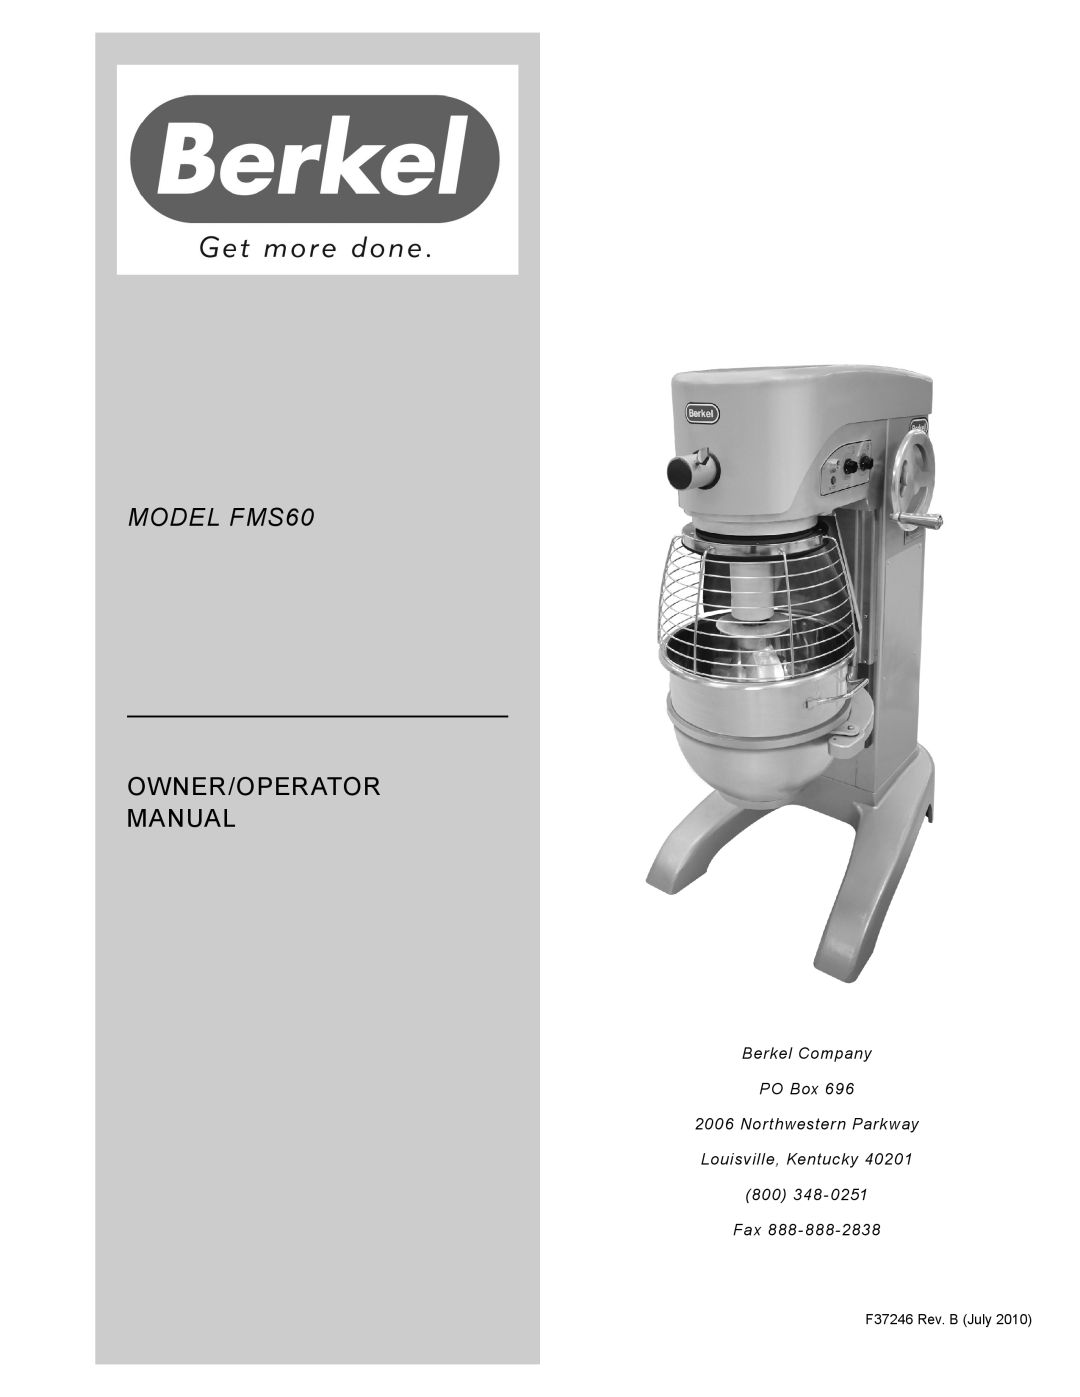 Berkel manual MODEL FMS60, Owner/Operator Manual, Berkel Company PO Box 2006 Northwestern Parkway Louisville, Kentucky 